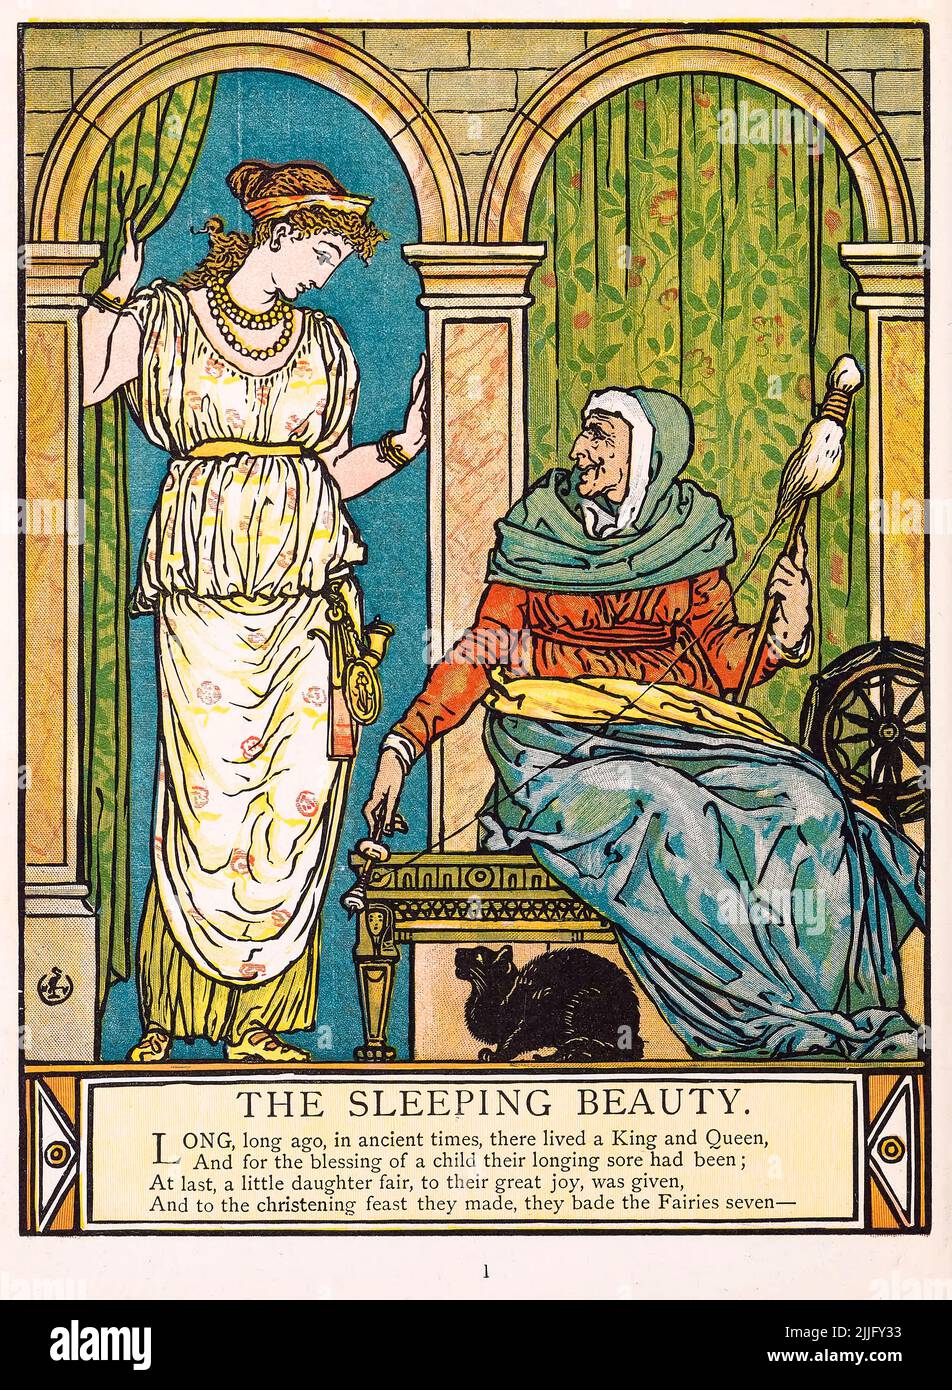 The Sleeping Beauty, children's book illustration by Walter Crane, 1876 Stock Photo